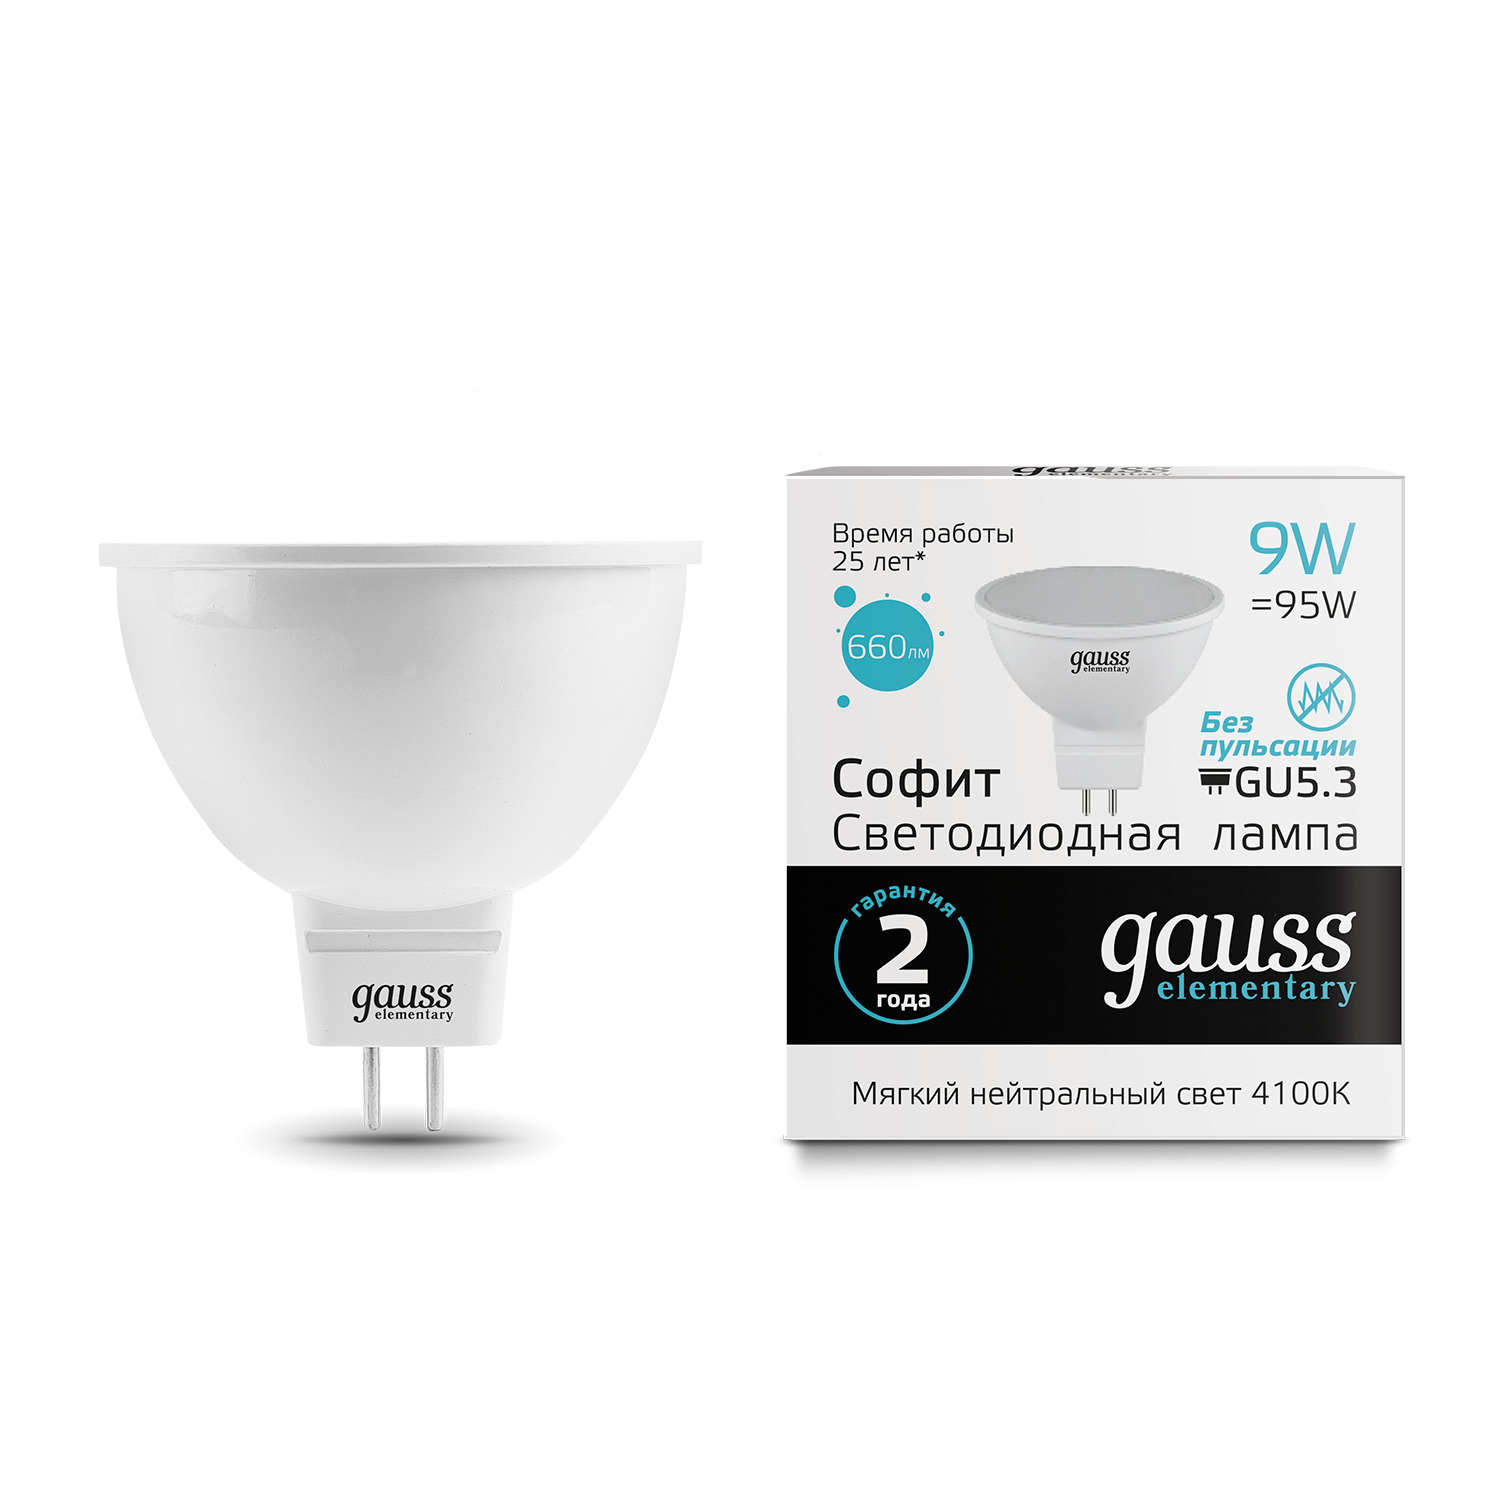 Лампа Gauss LED Elementary MR16 GU5.3 9W 4100K gauss led elementary a60 10w e27 4100k 1 10 50